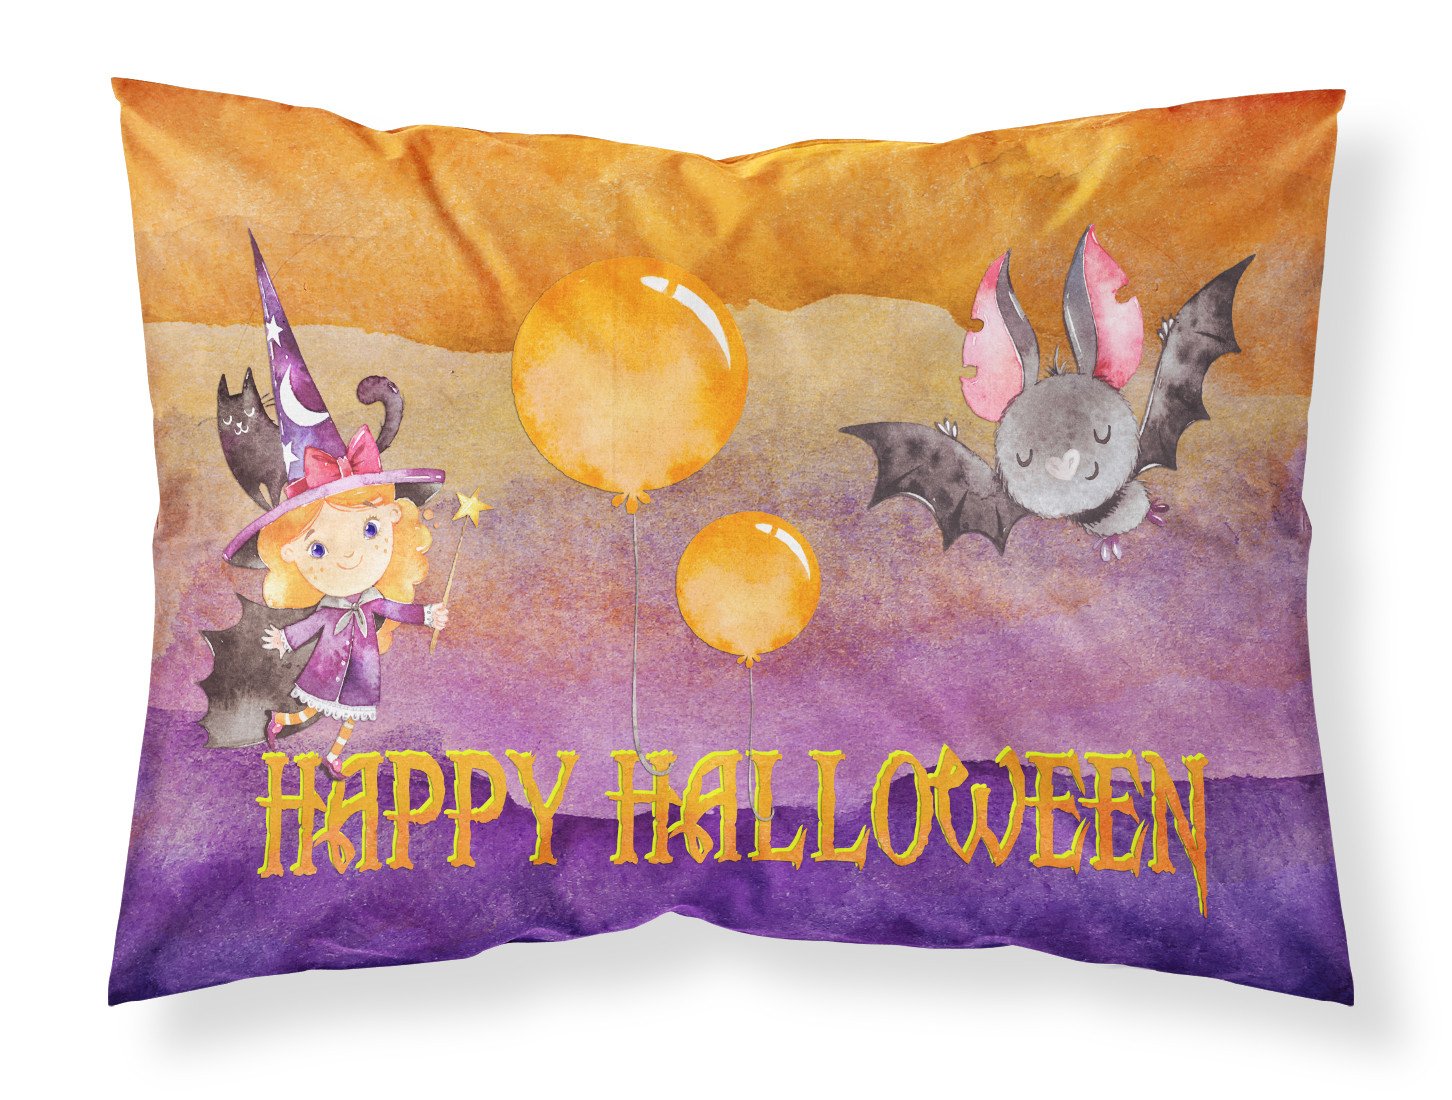 Halloween Little Witch and Bat Fabric Standard Pillowcase BB7458PILLOWCASE by Caroline's Treasures